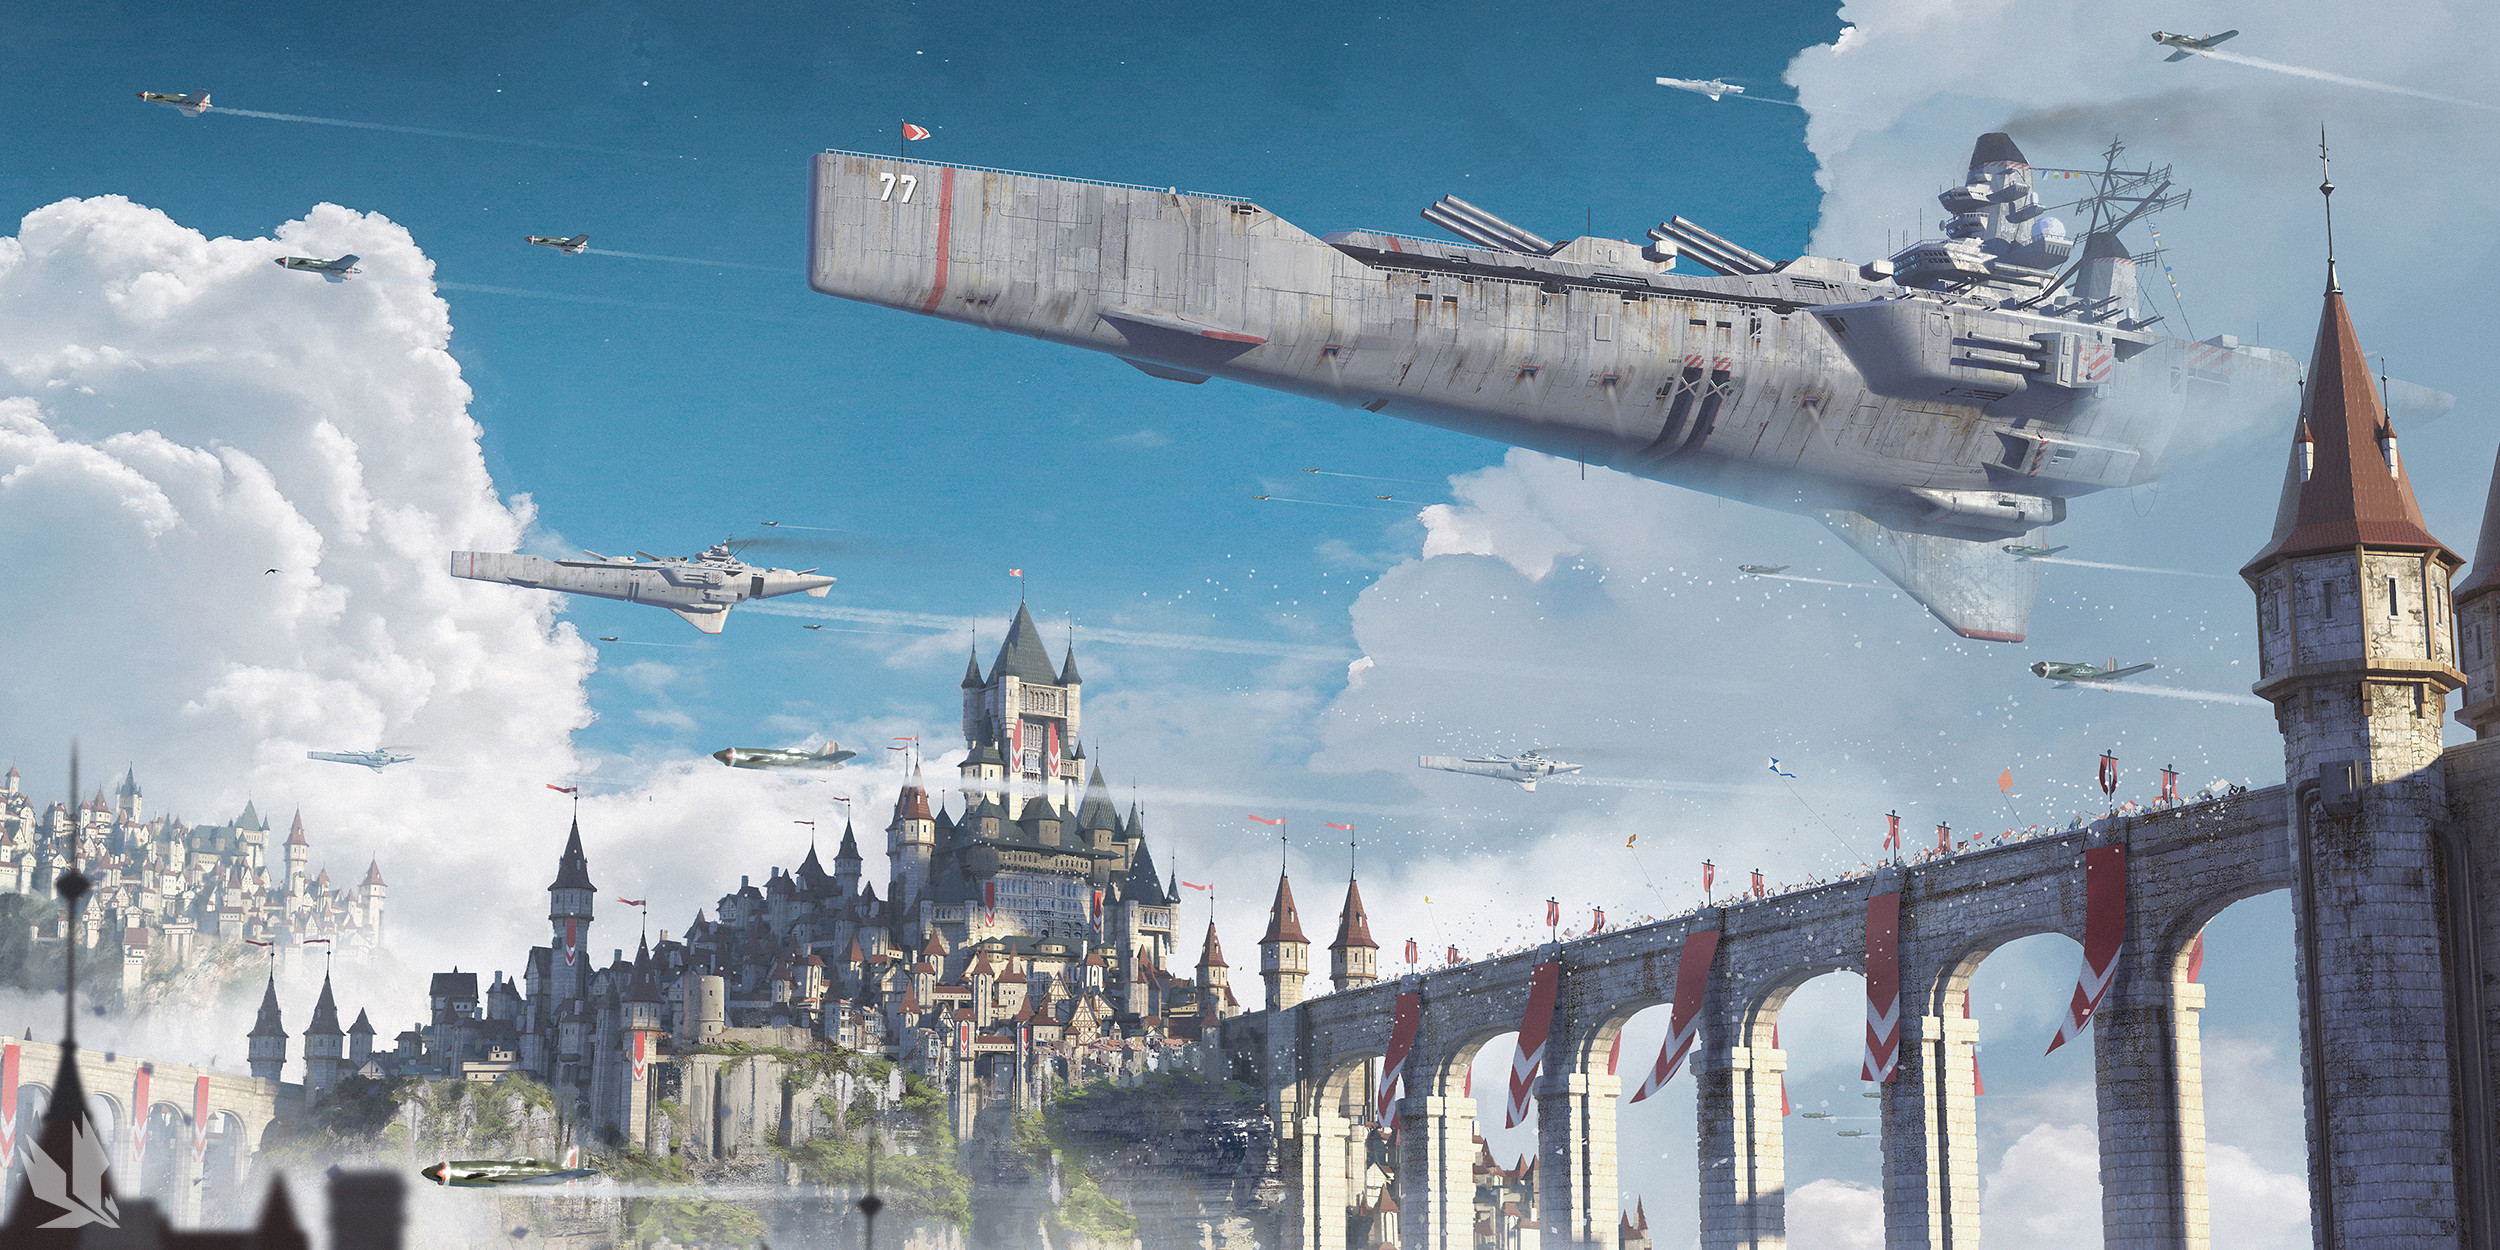 Digital Art Artwork Illustration City Cityscape Clouds Futuristic Spaceship Bridge Castle Sky 2500x1250